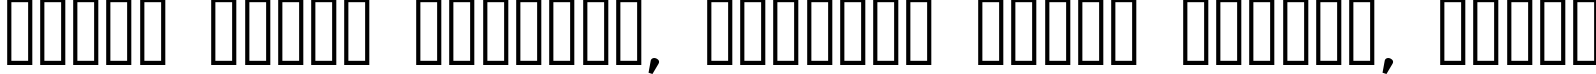 Пример написания шрифтом Latha текста на белорусском